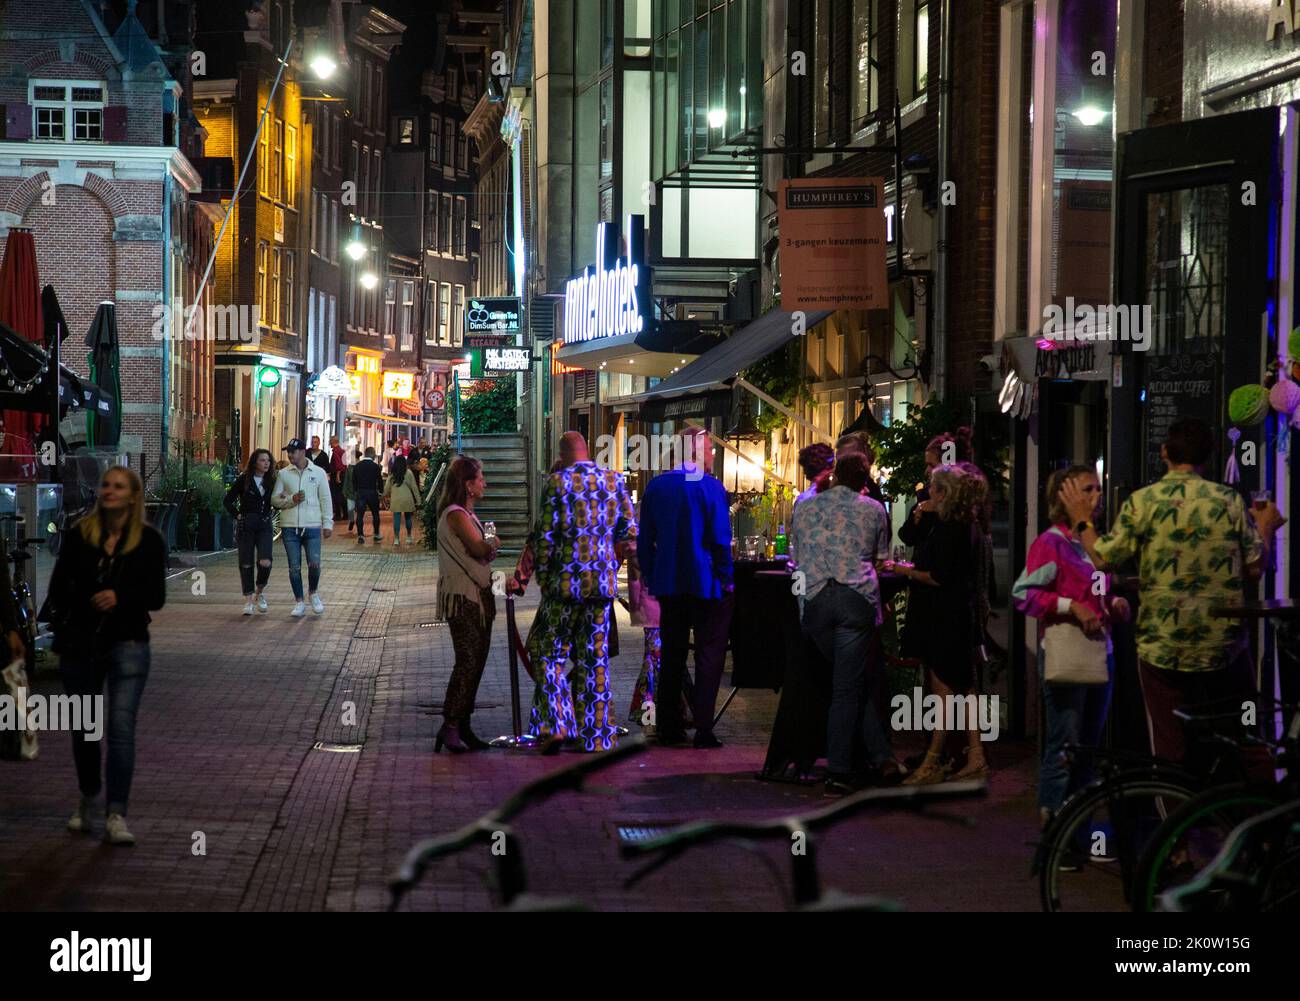 An Amsterdam street at night Stock Photo